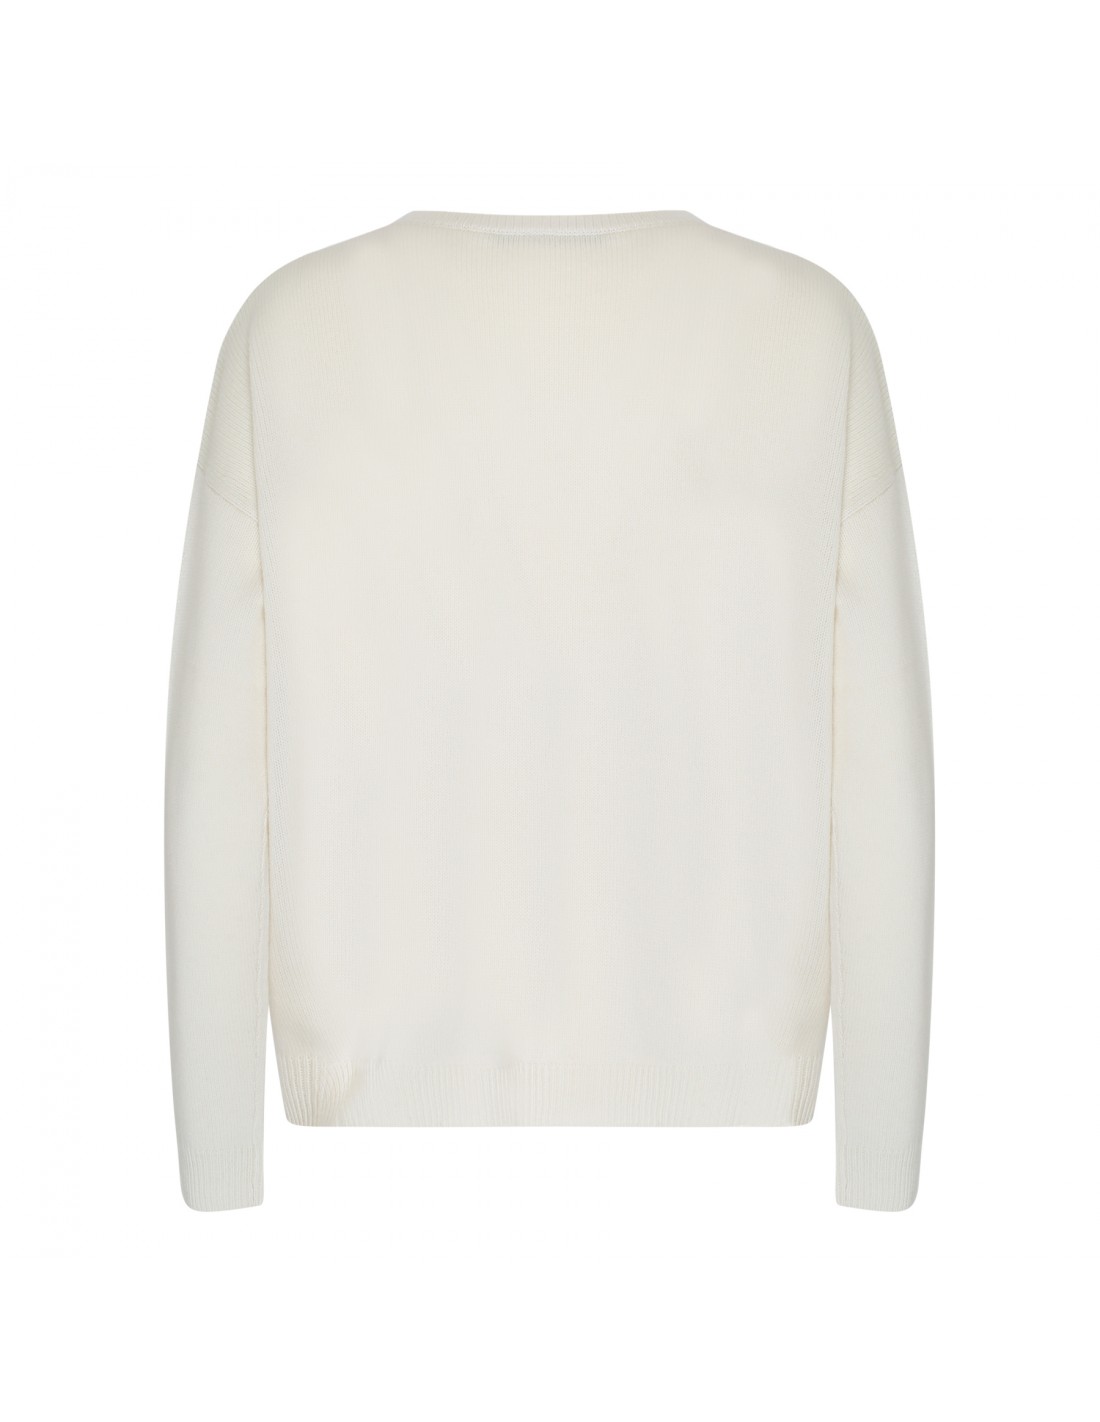 Edo white cashmere sweater